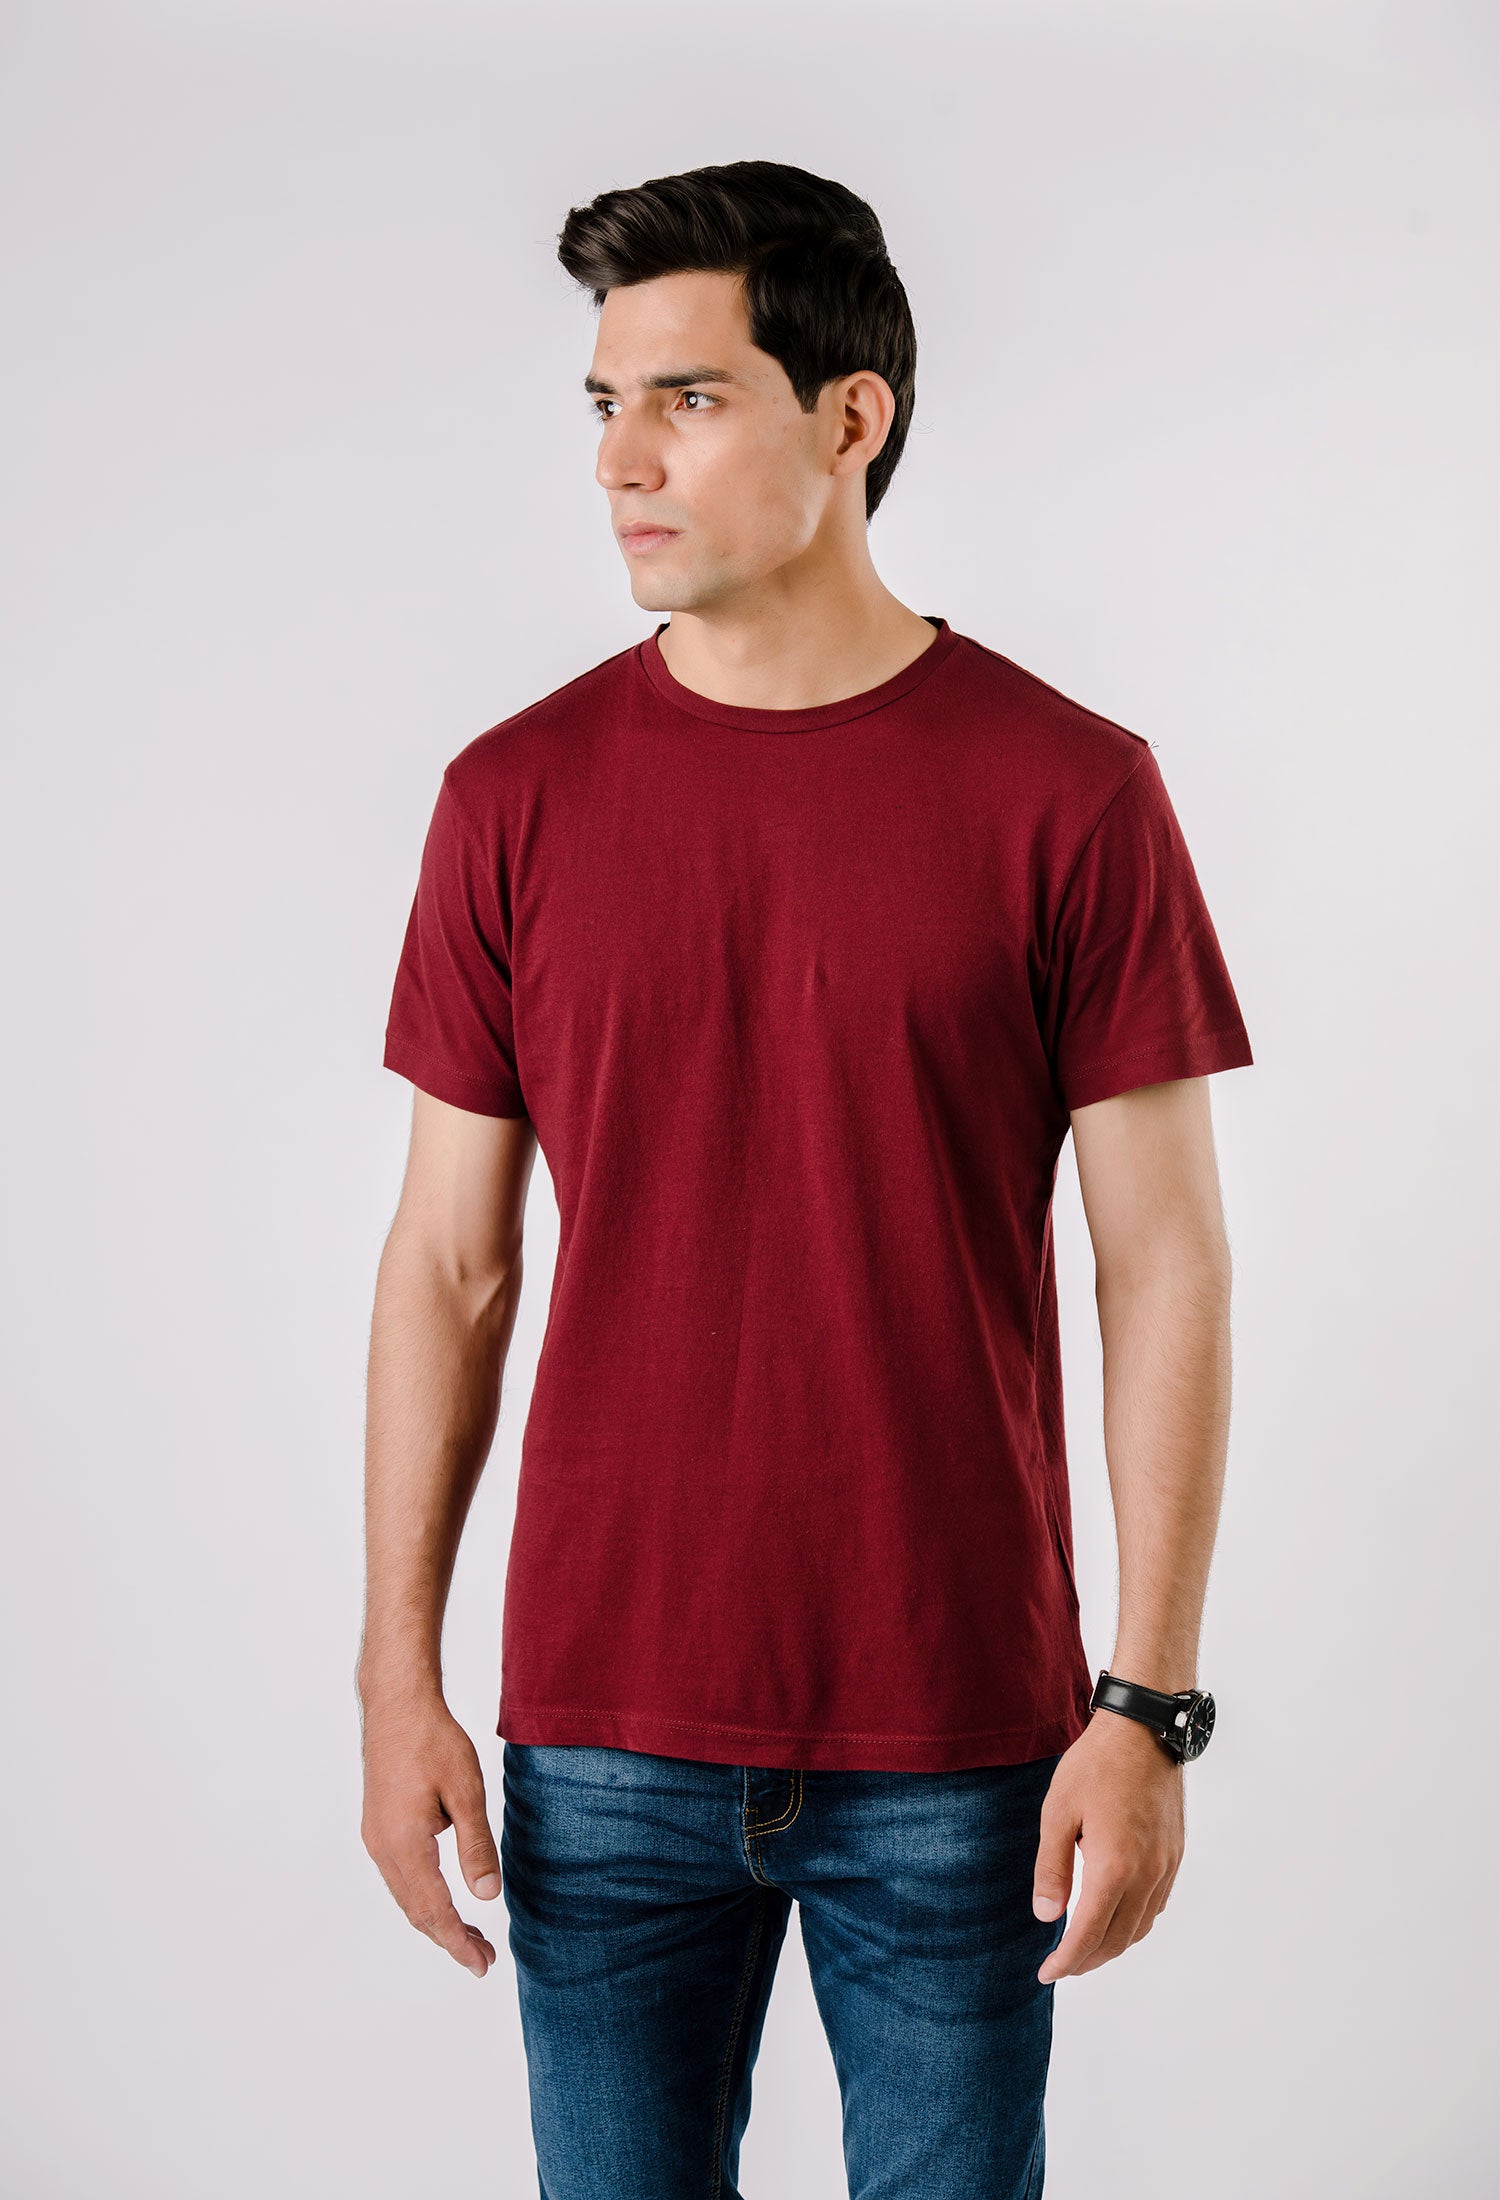 Maroon Basic T-Shirt (T-SHB-0001)